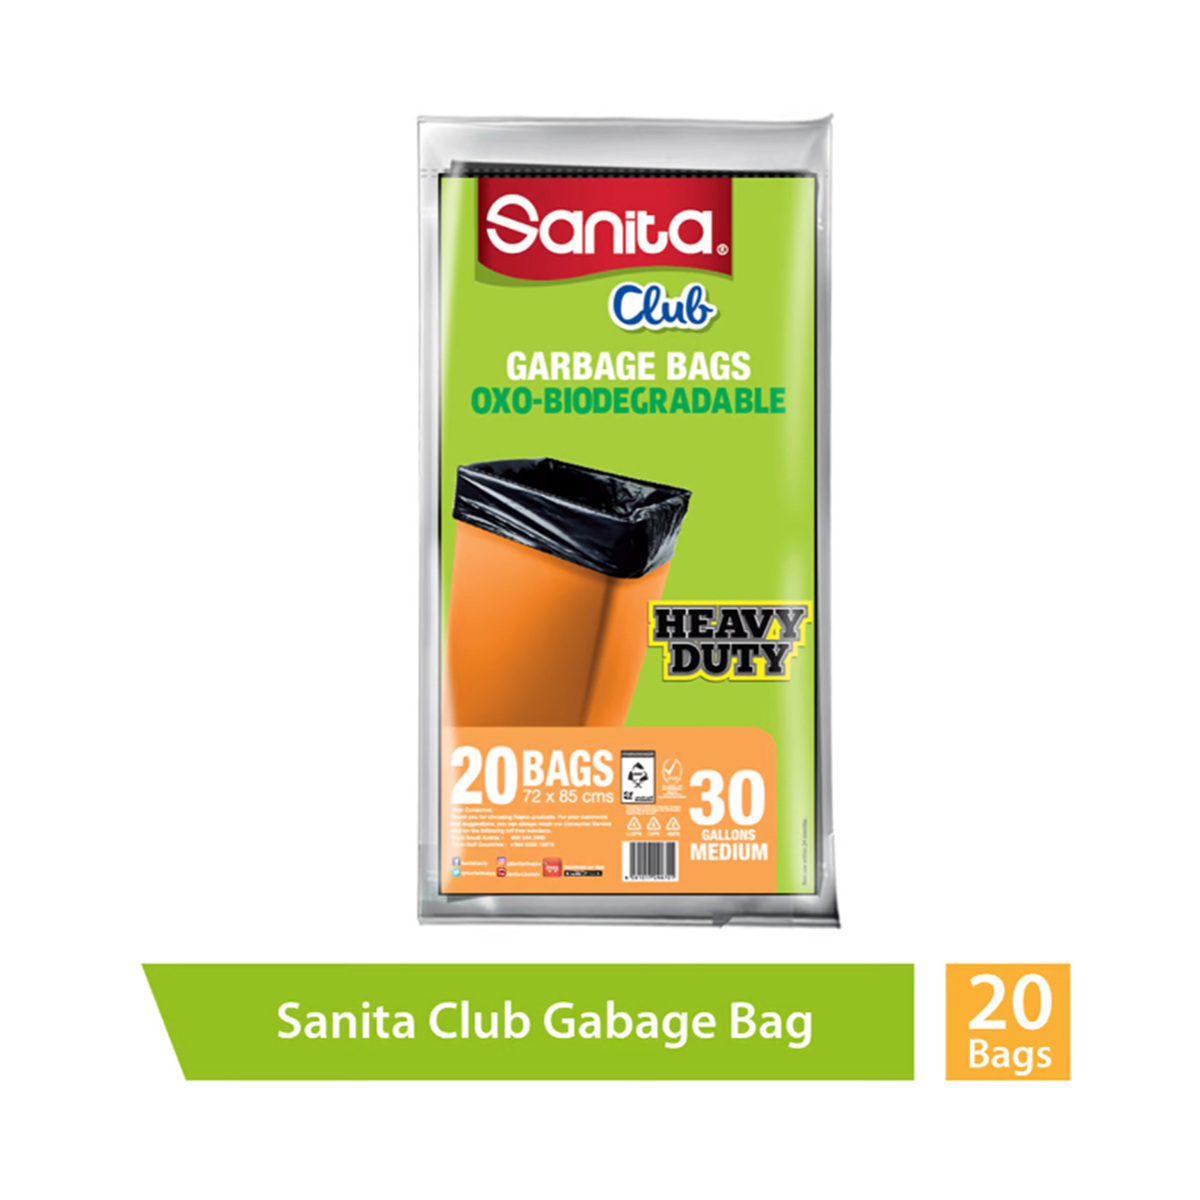 Sanita Club Garbage Bag Heavy Duty 30 Gallons 2 x 20pcs